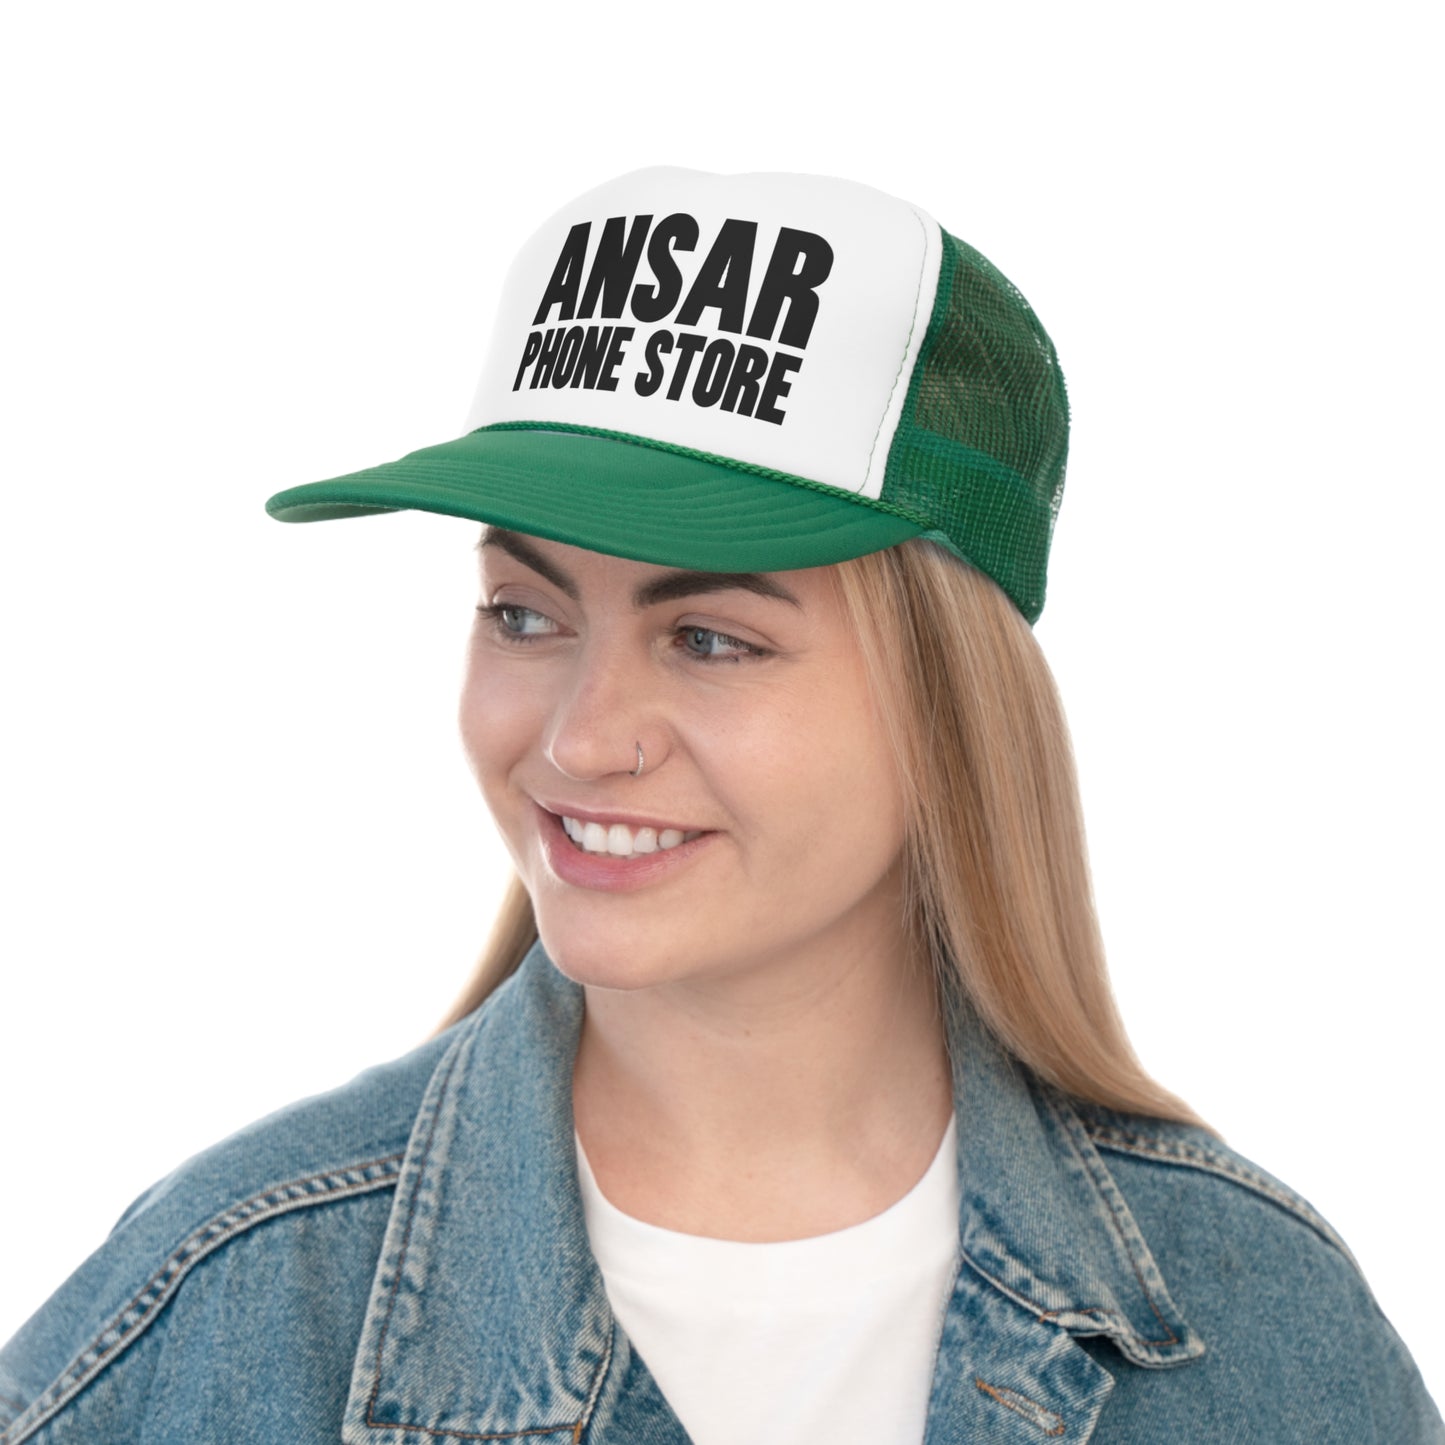 ANSAR Phone Store Hat